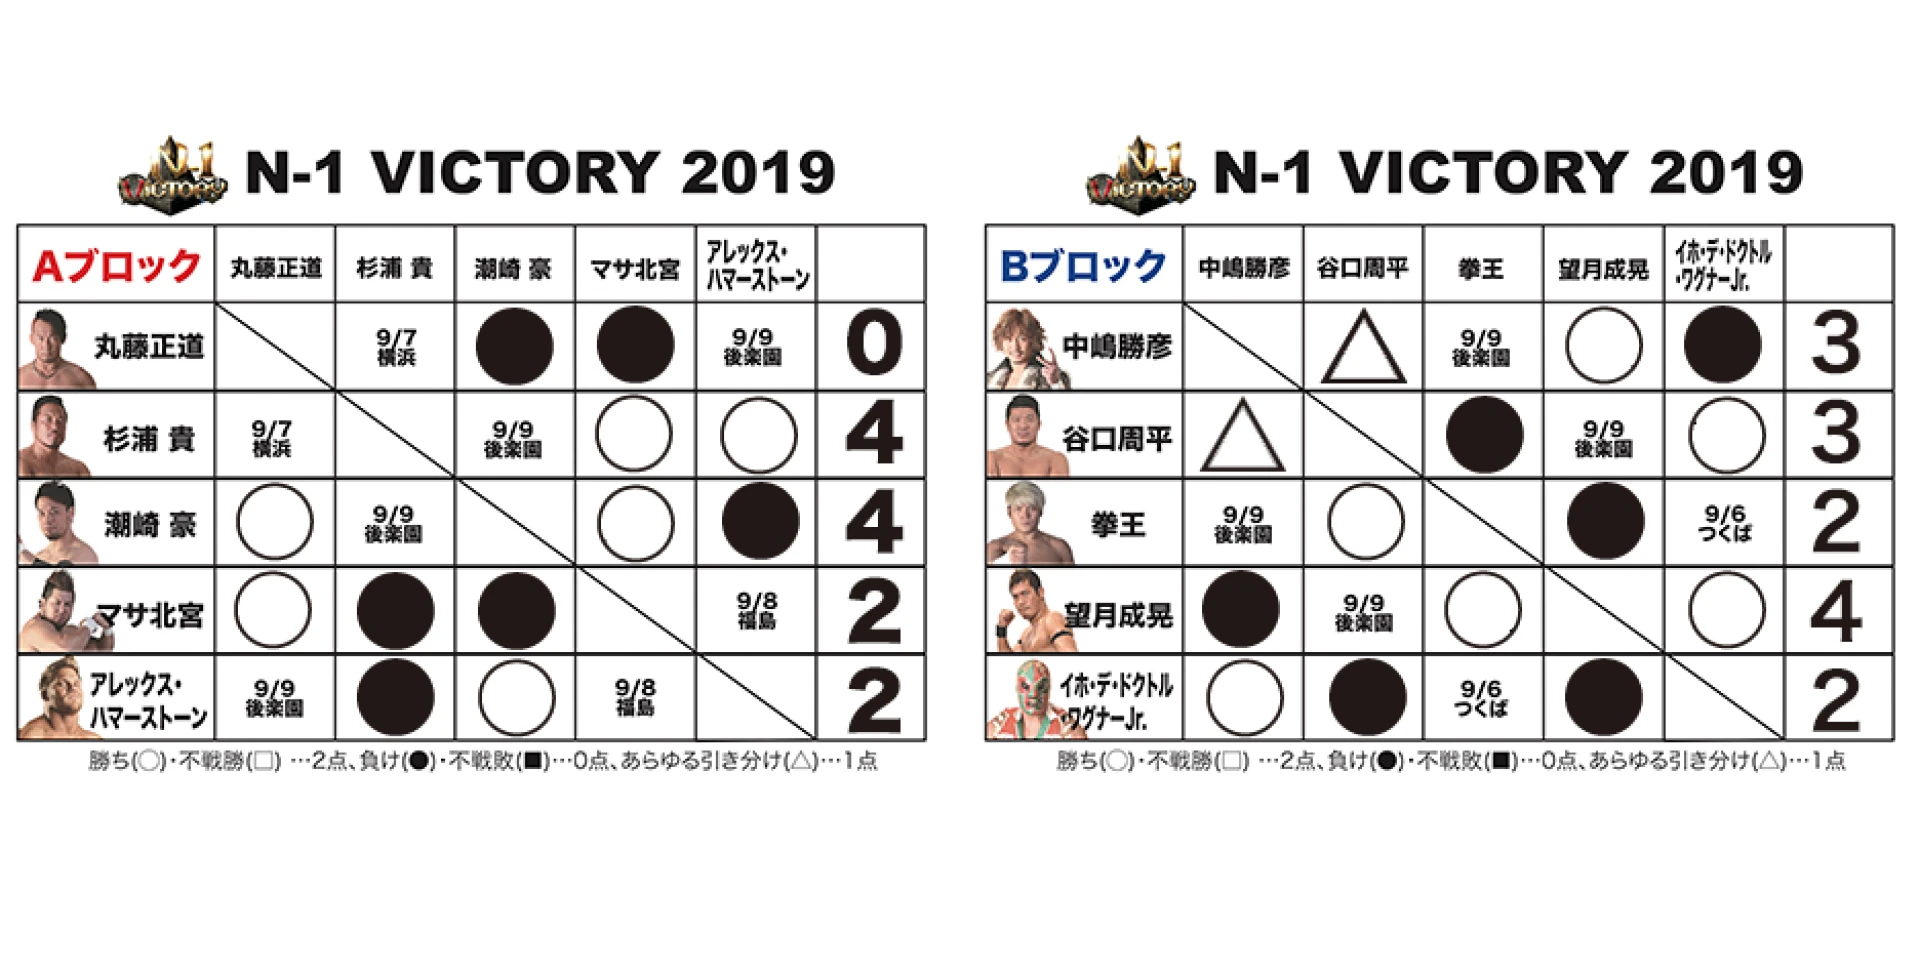 【8.29後楽園大会終了時の得点状況】『N-1 VICTORY 2019』得点表